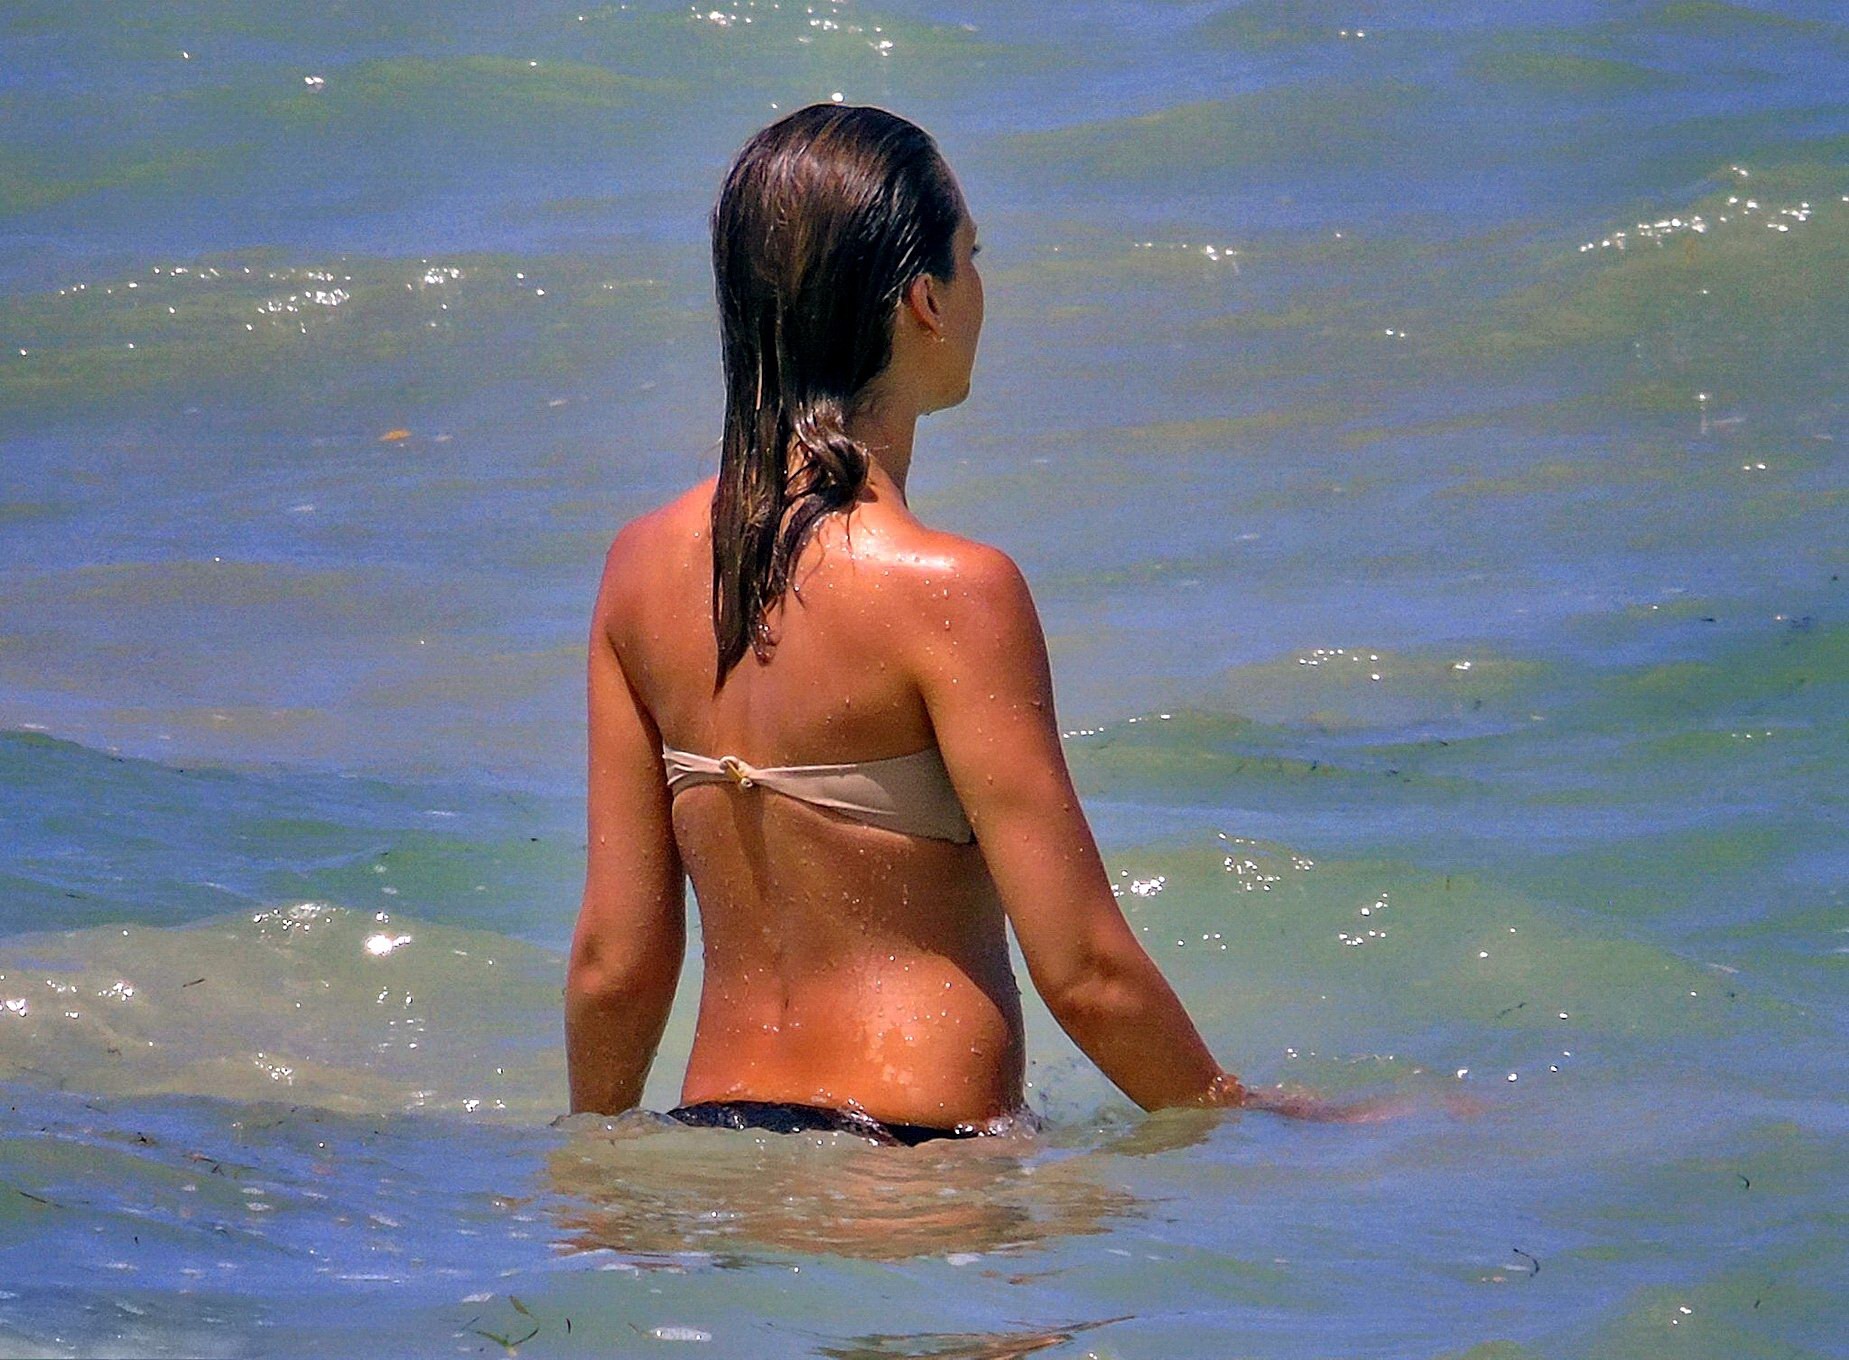 Jessica Alba wearing a strapless bikini on a beach in Mexico